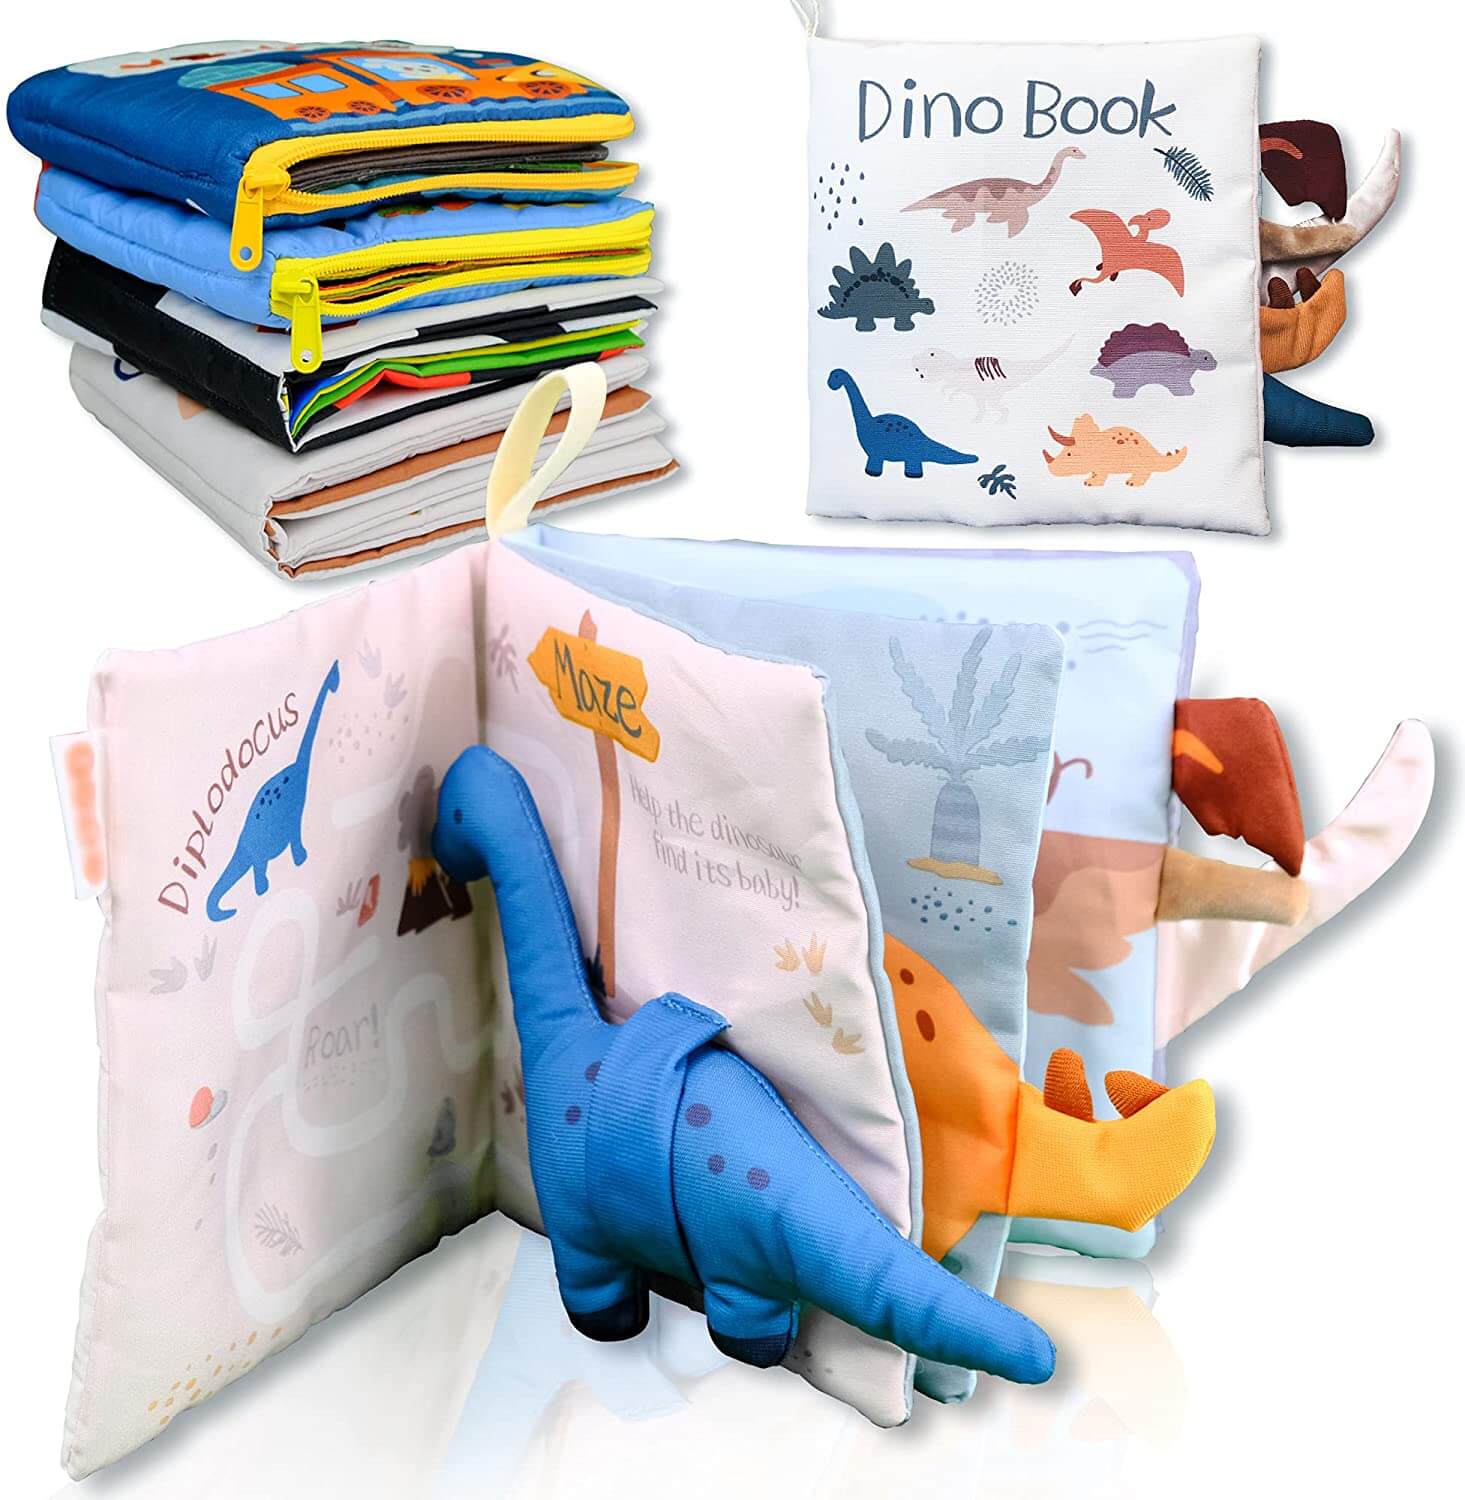 Soft dinosaur book for babies